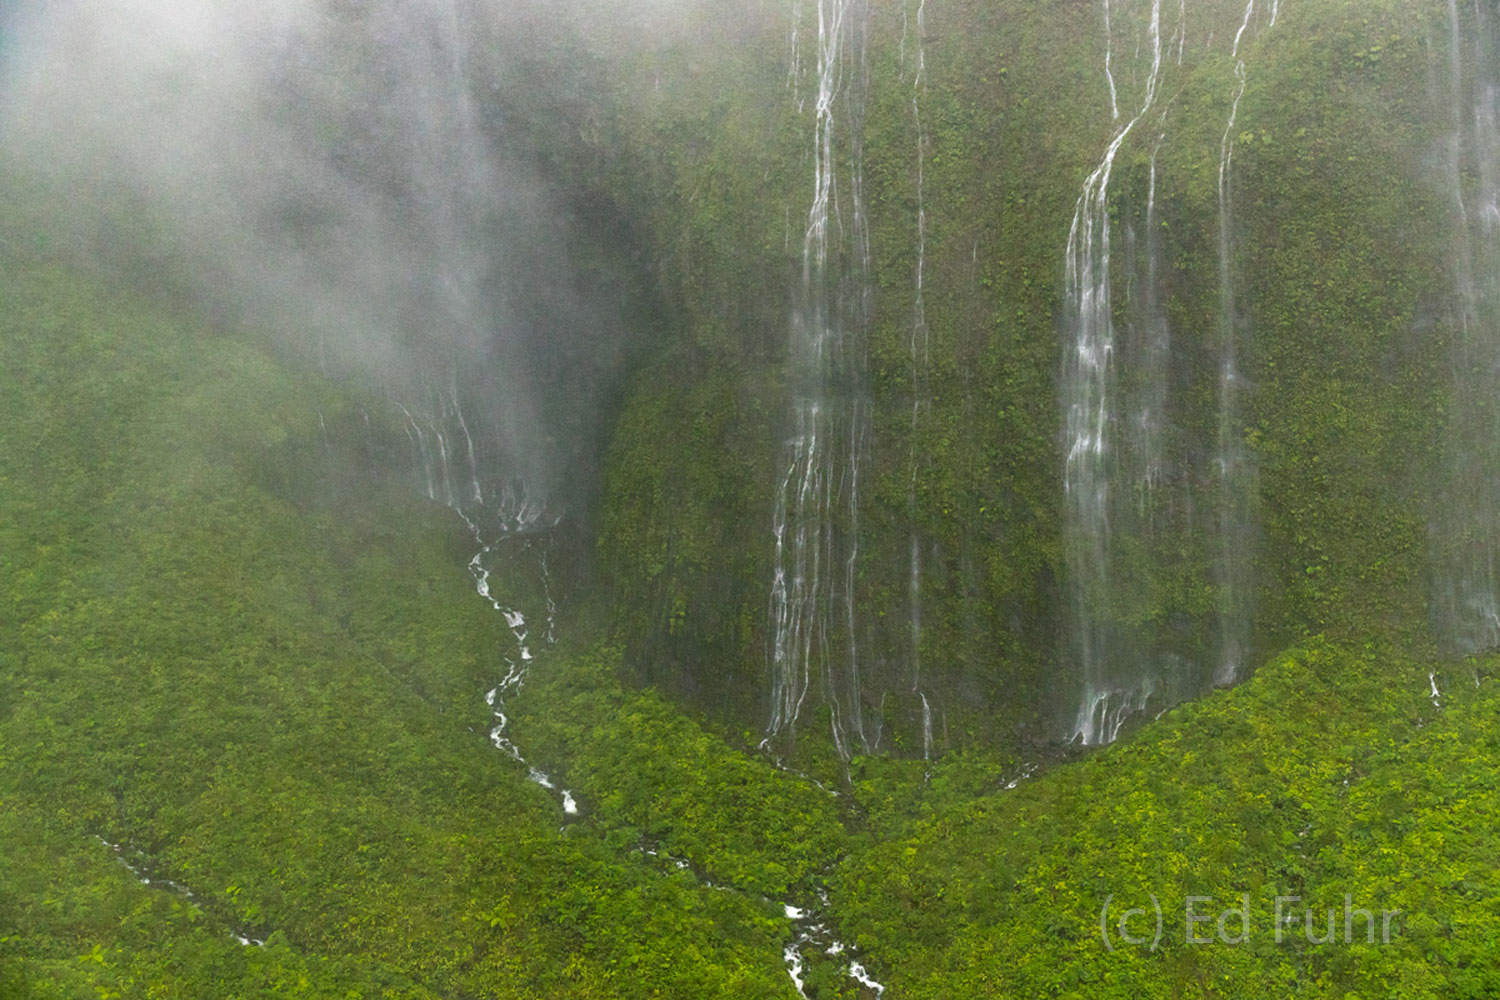 Streams of water tumble down Kauai's rugged mountains.